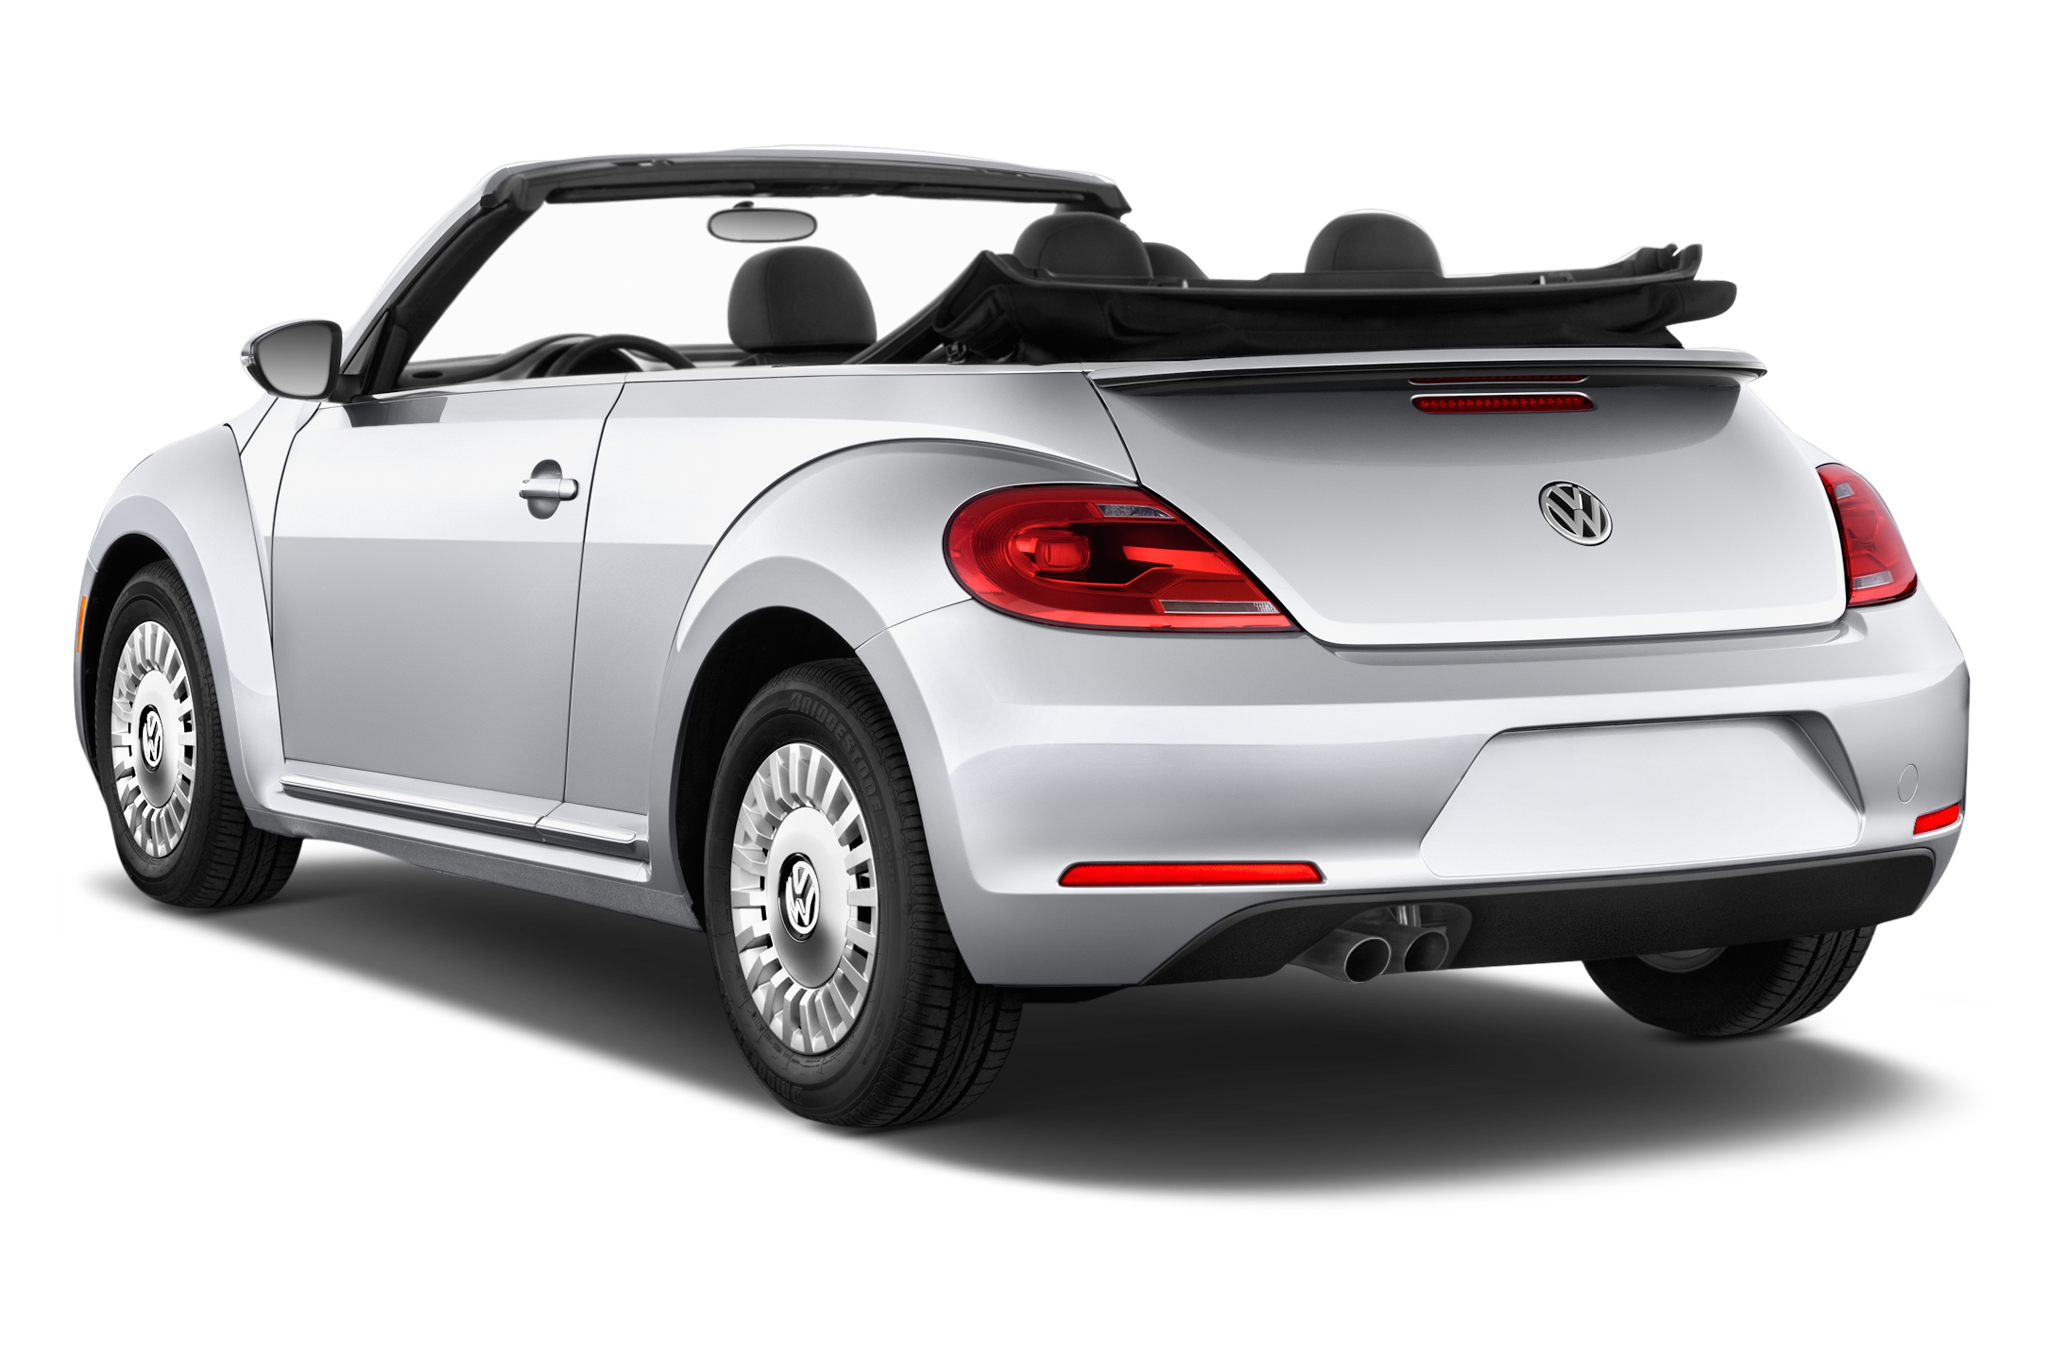 Volkswagen Beetle Backgrounds, Compatible - PC, Mobile, Gadgets| 2048x1360 px